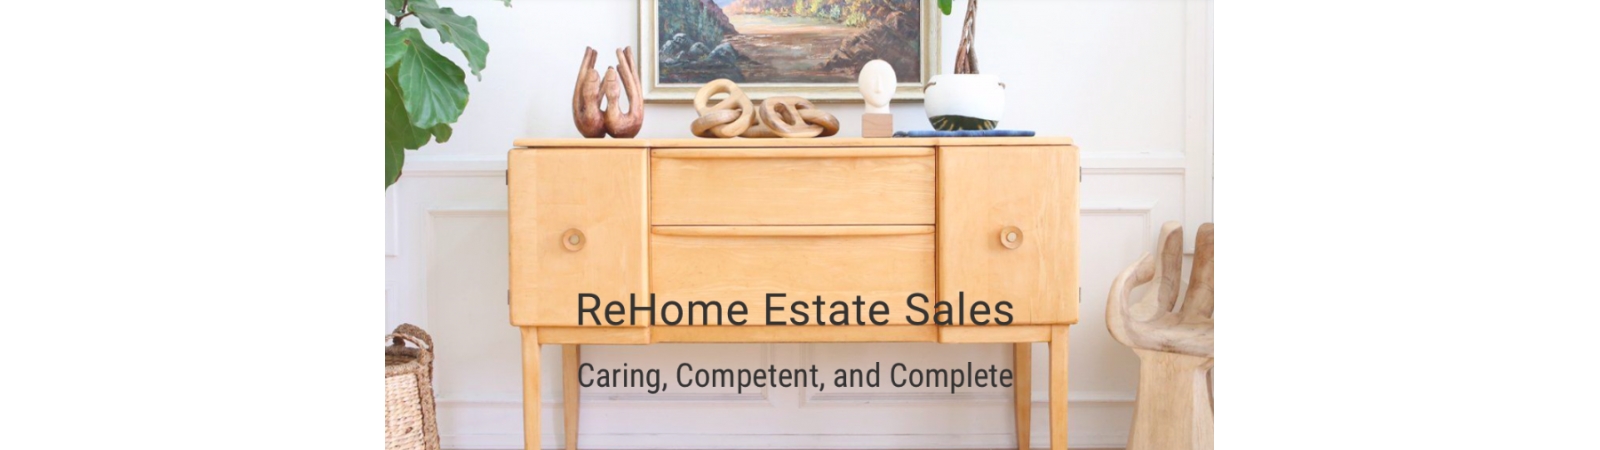 ReHome Estate Sales | AuctionNinja